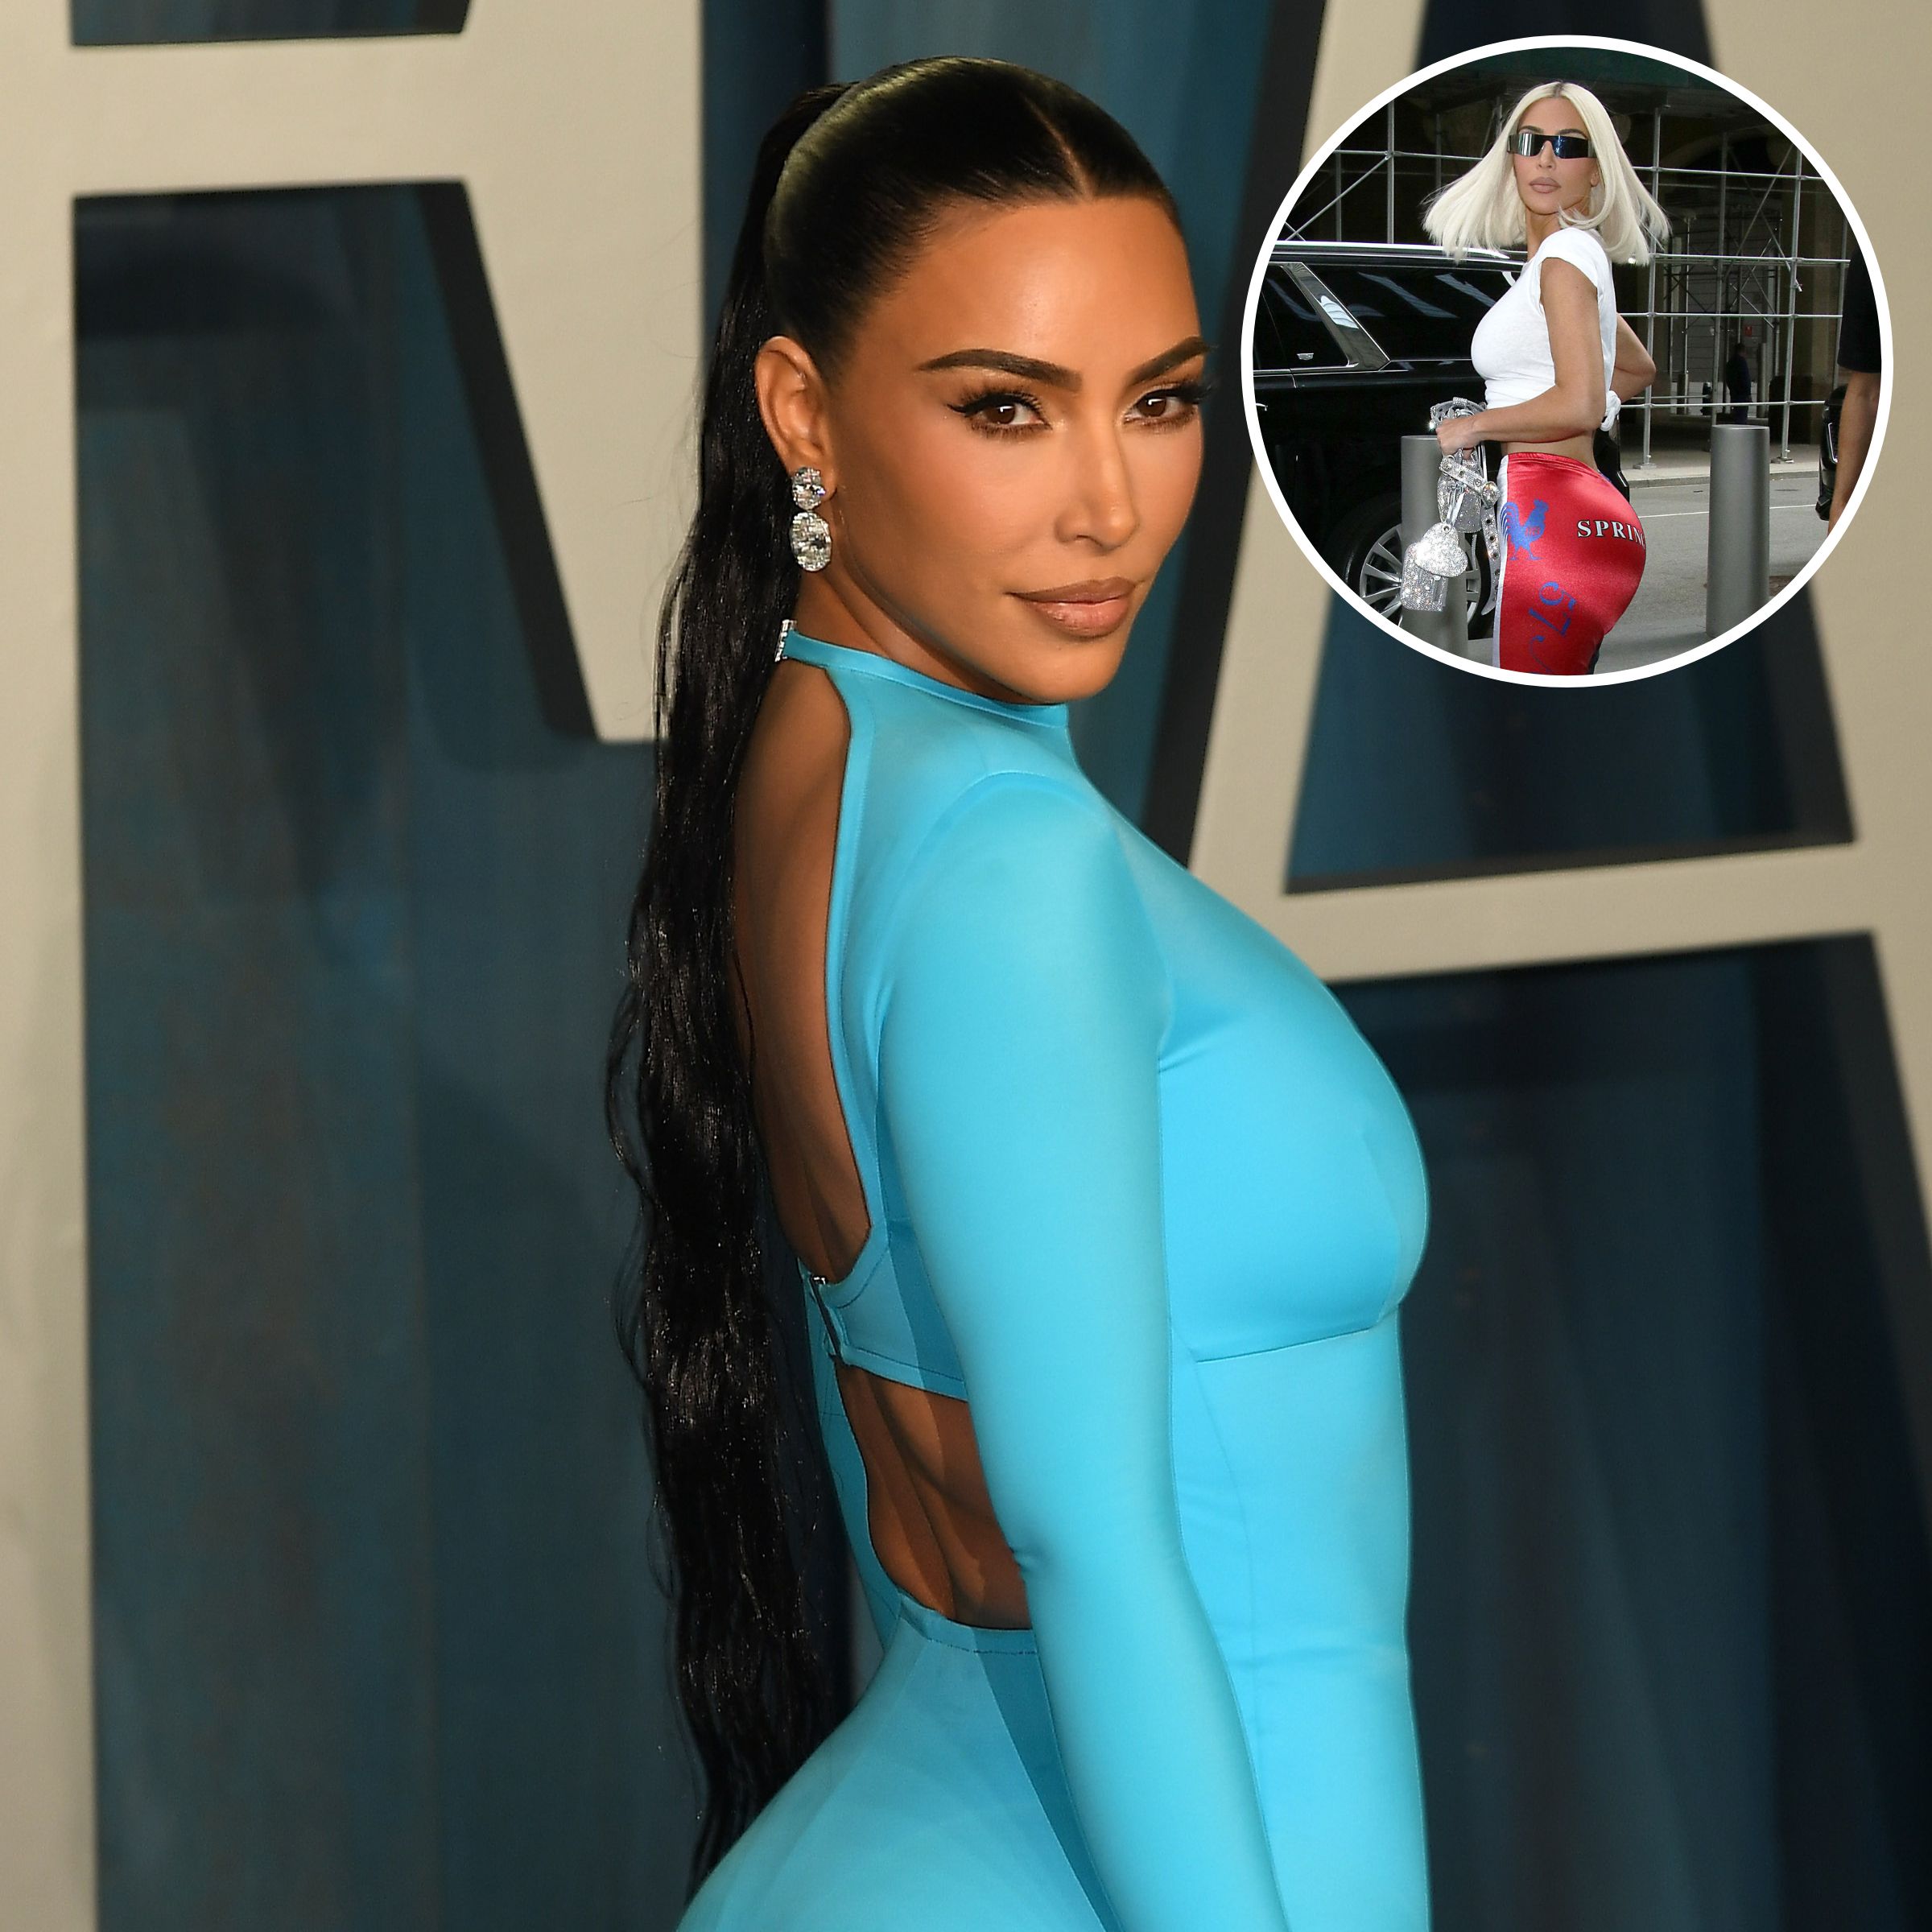 Kim Kardashian flaunts her butt in tight black leggings and crop